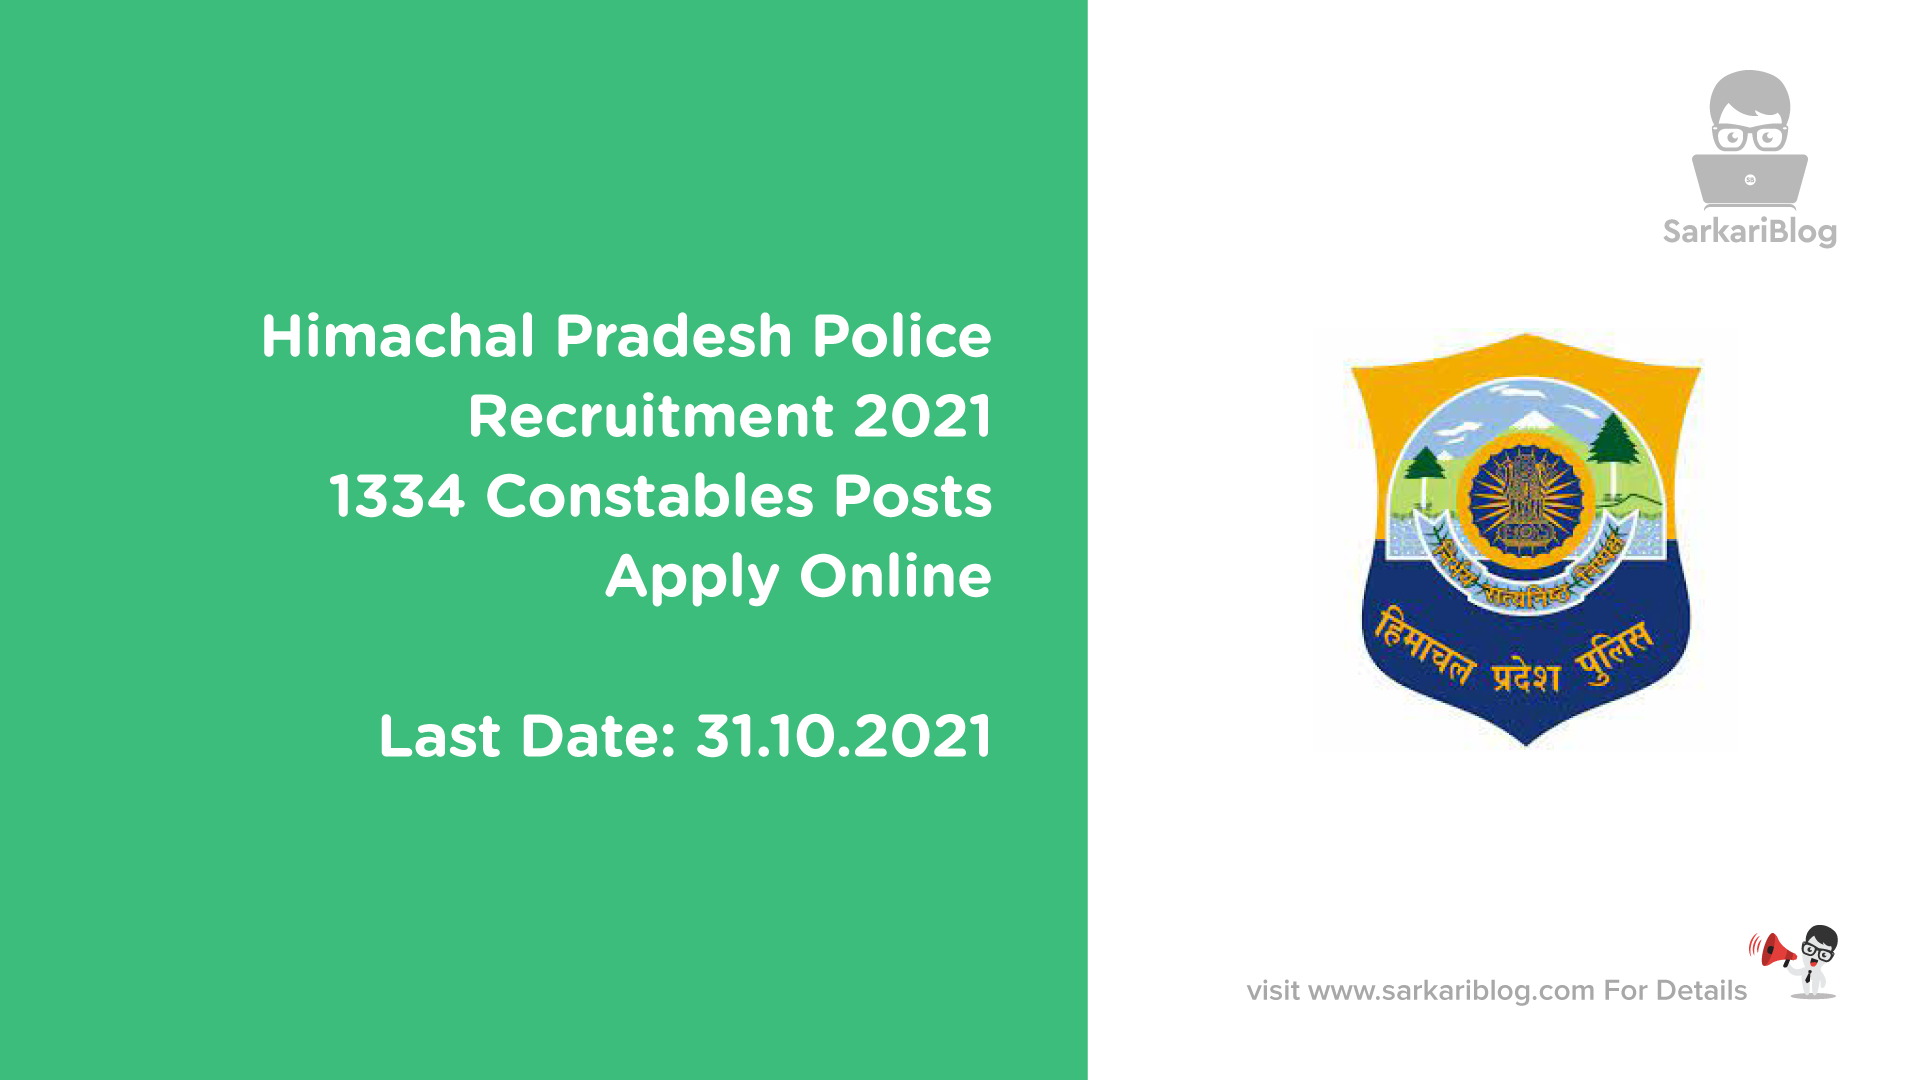 Himachal Pradesh Police Recruitment 2021, 1334 Constables Posts, Apply Online